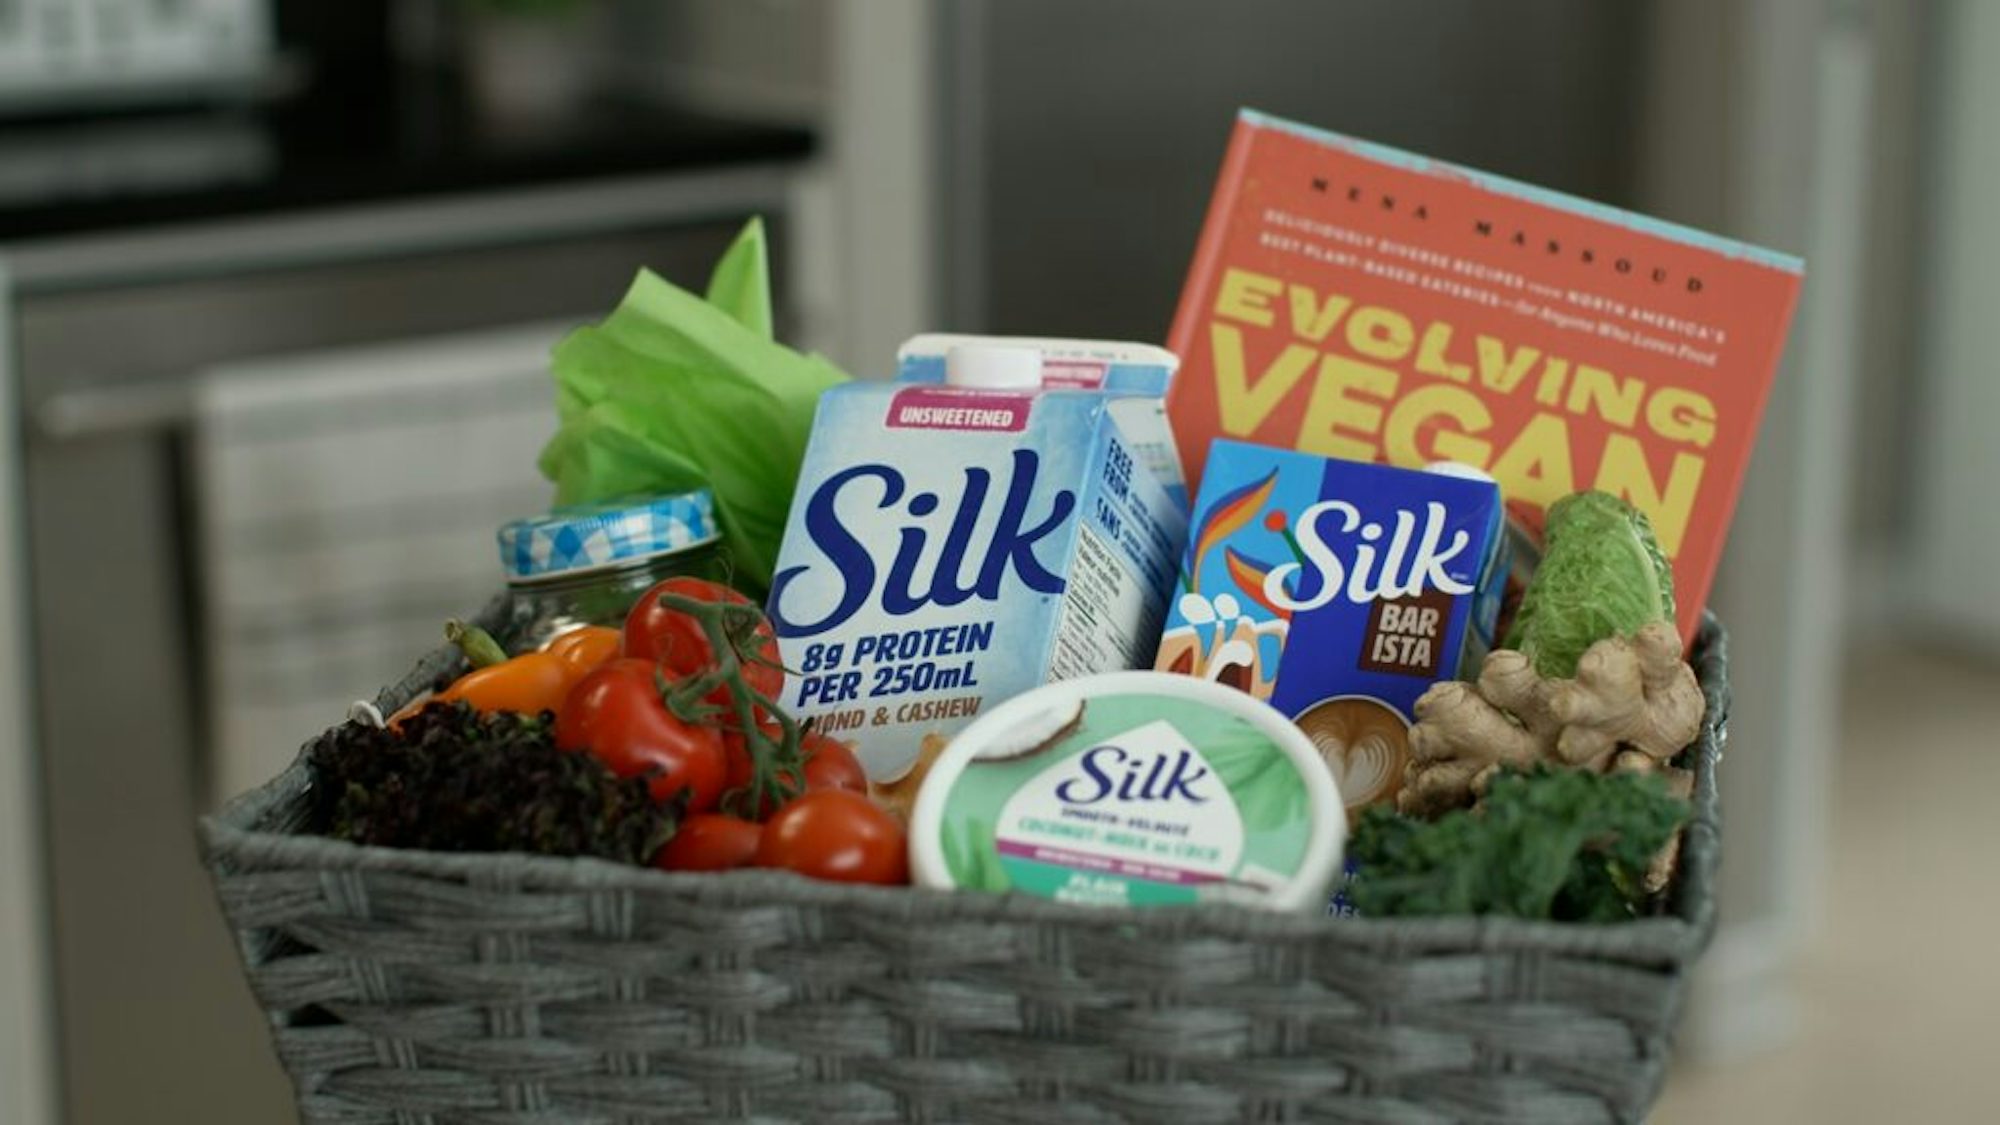 Original custom content - Silk basket with Evolving Vegan book